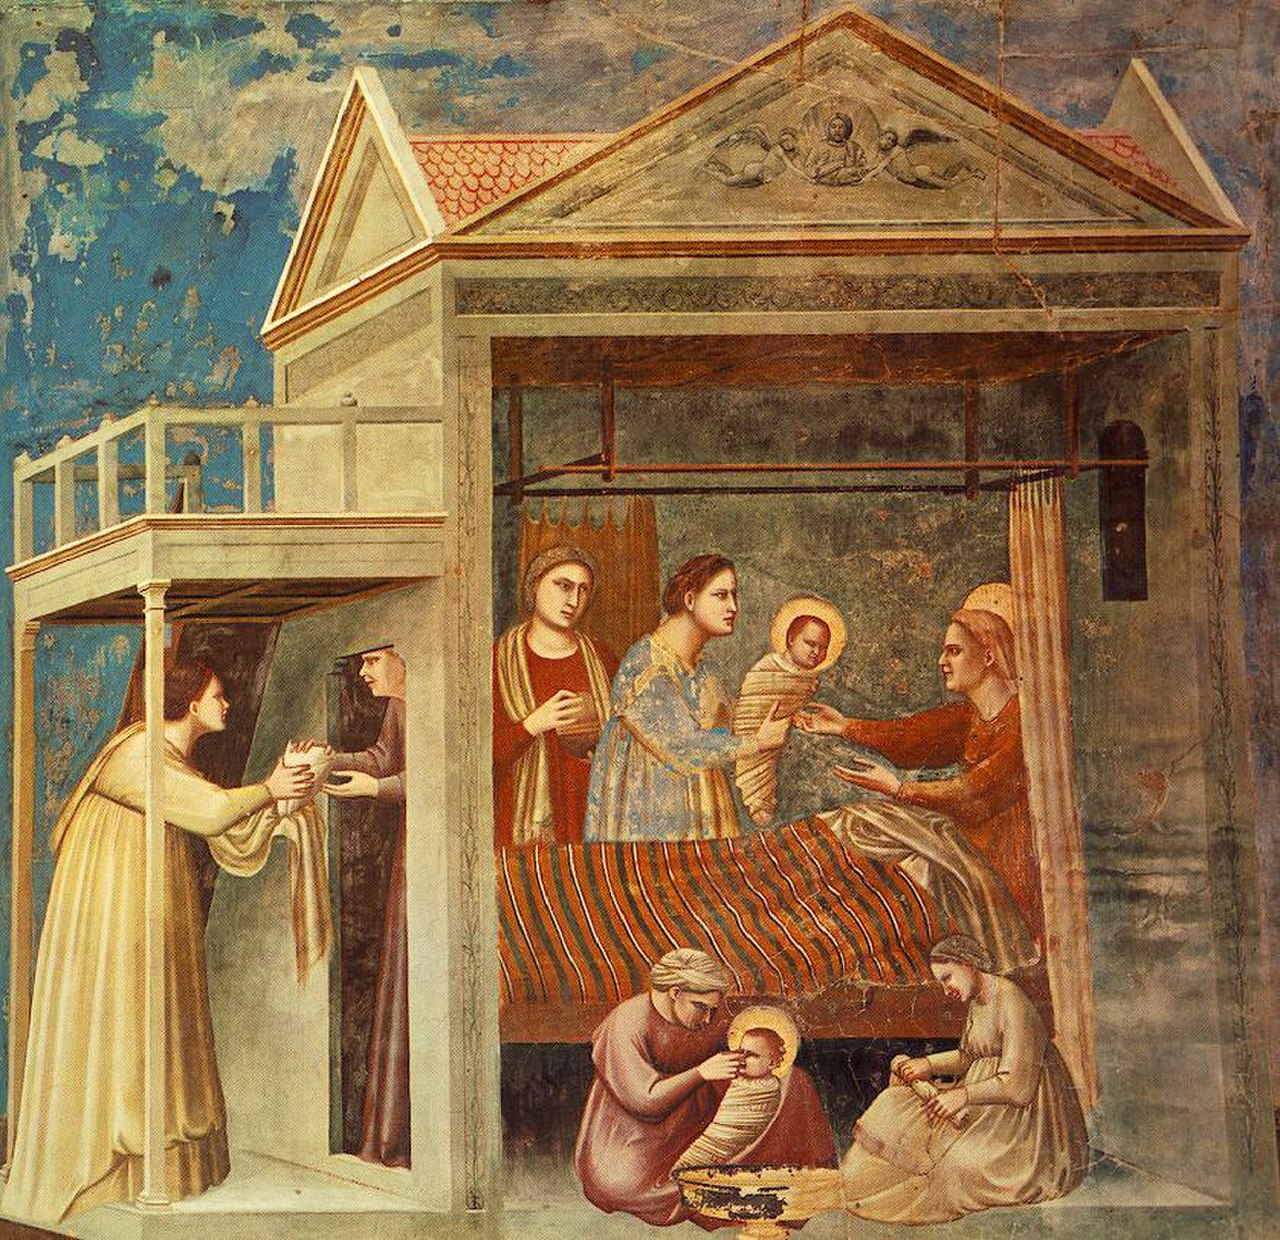 1280px-Giotto_-_Scrovegni_-_-07-_-_The_Birth_of_the_Virgin.jpg - 526,27 kB